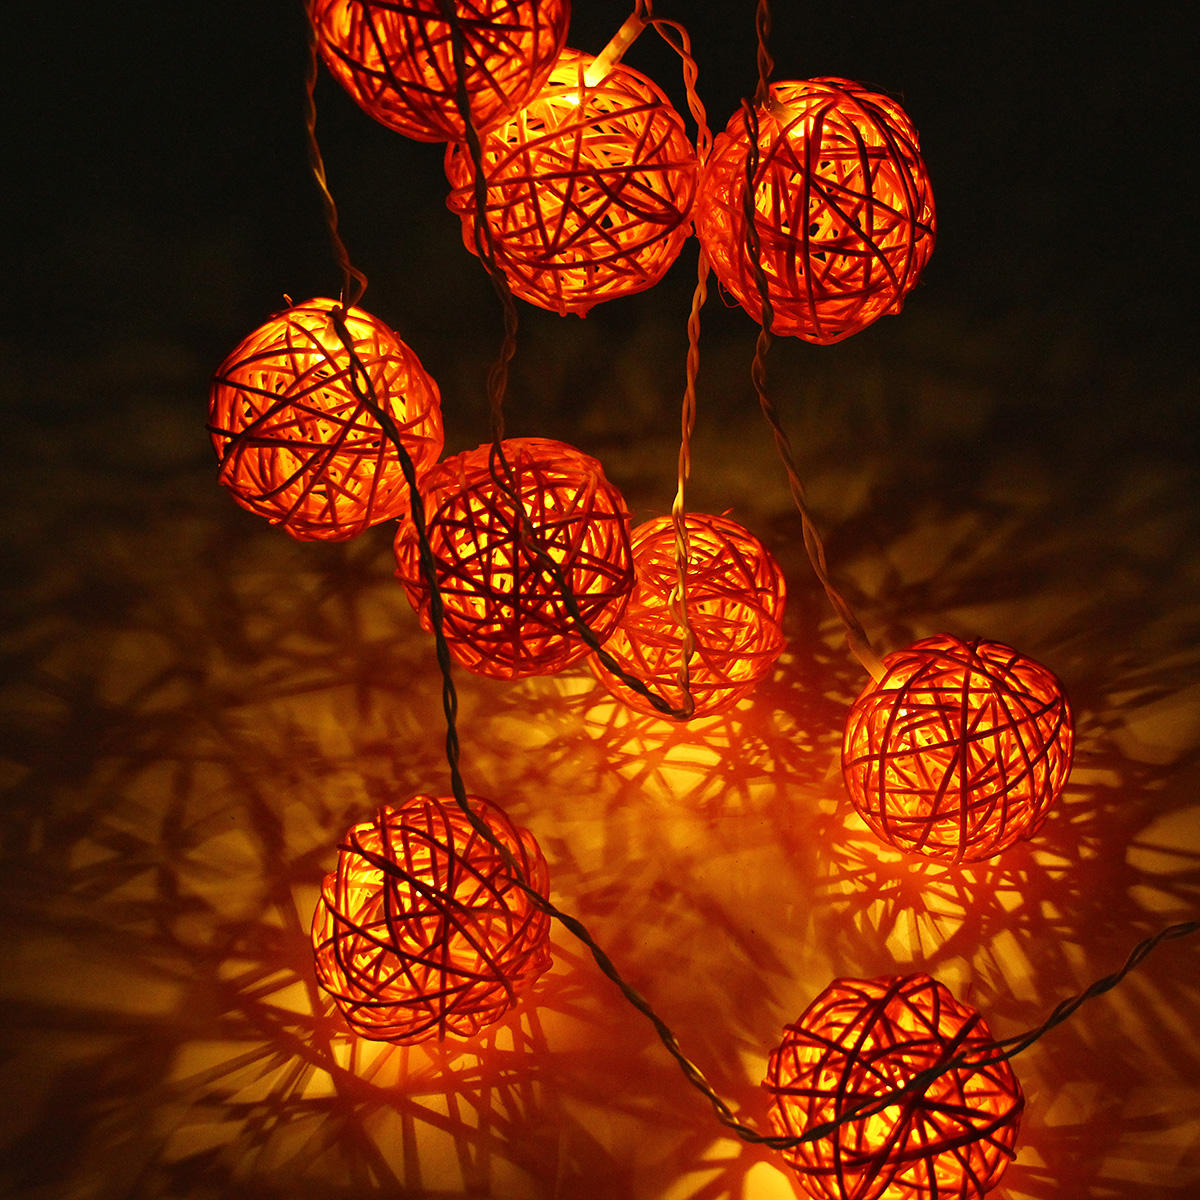 35 LED Rattan Ball String Light Home Garden Fairy Colorful Lamp Wedding Party Xmas Decor